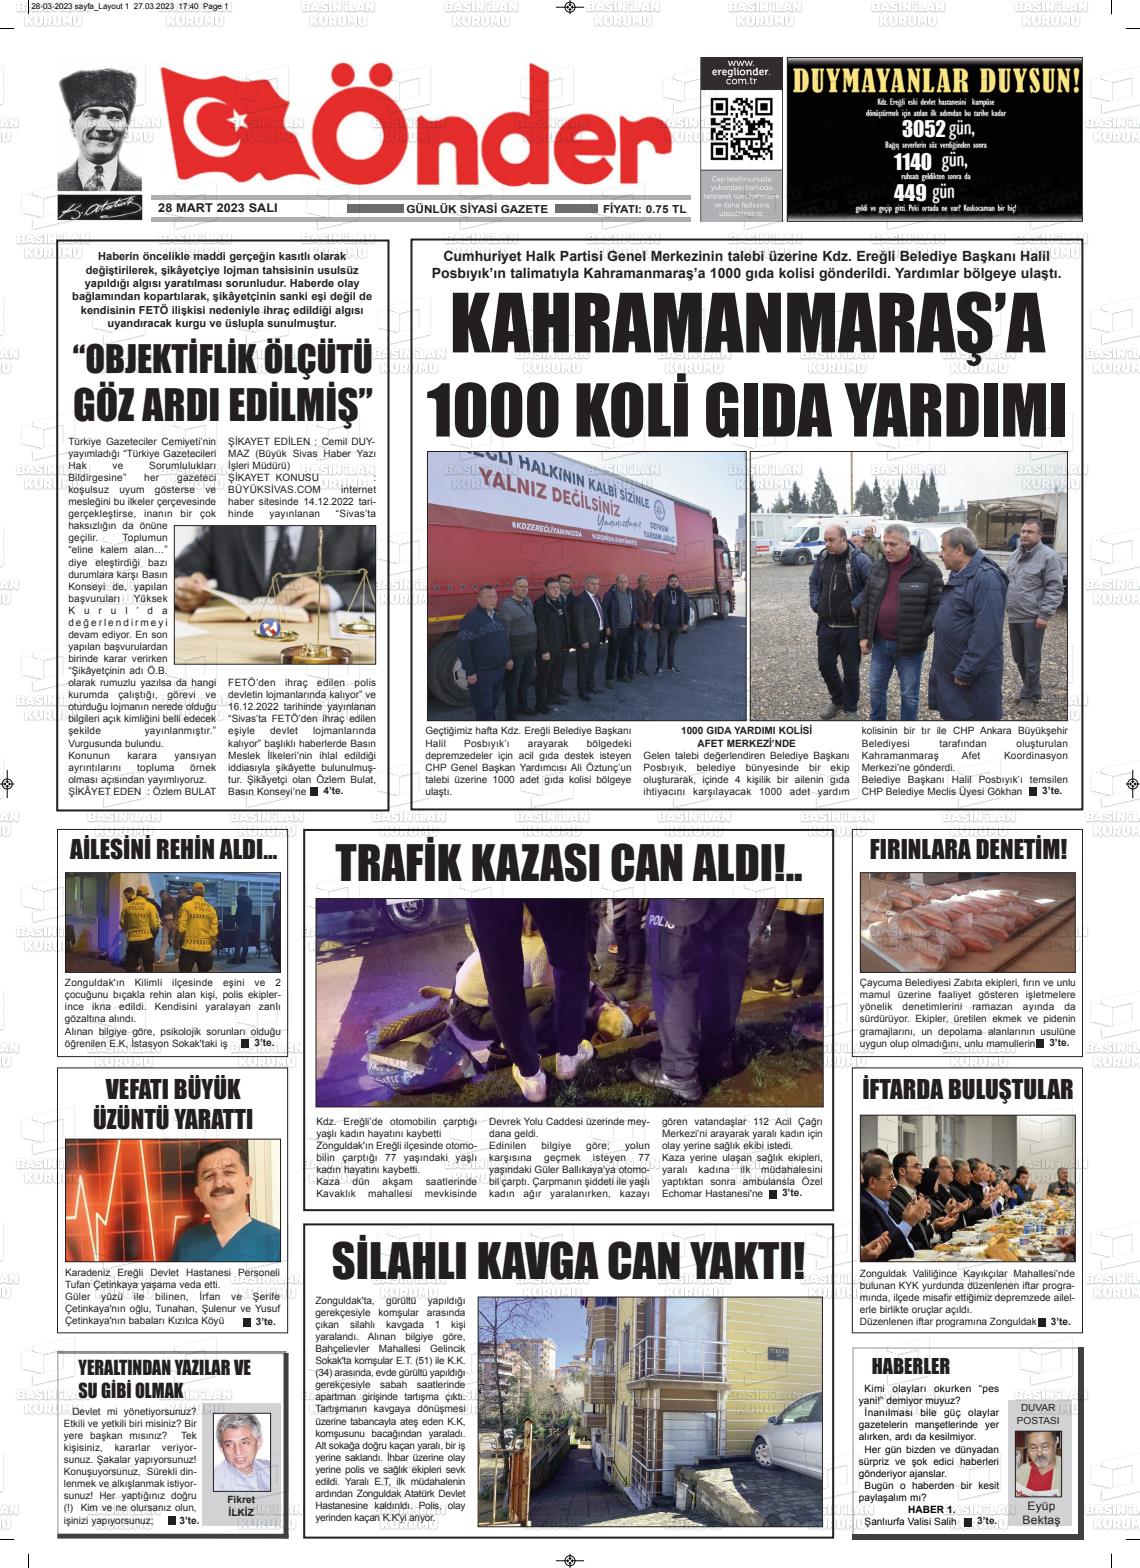 28 Mart 2023 Zonguldak Önder Gazete Manşeti